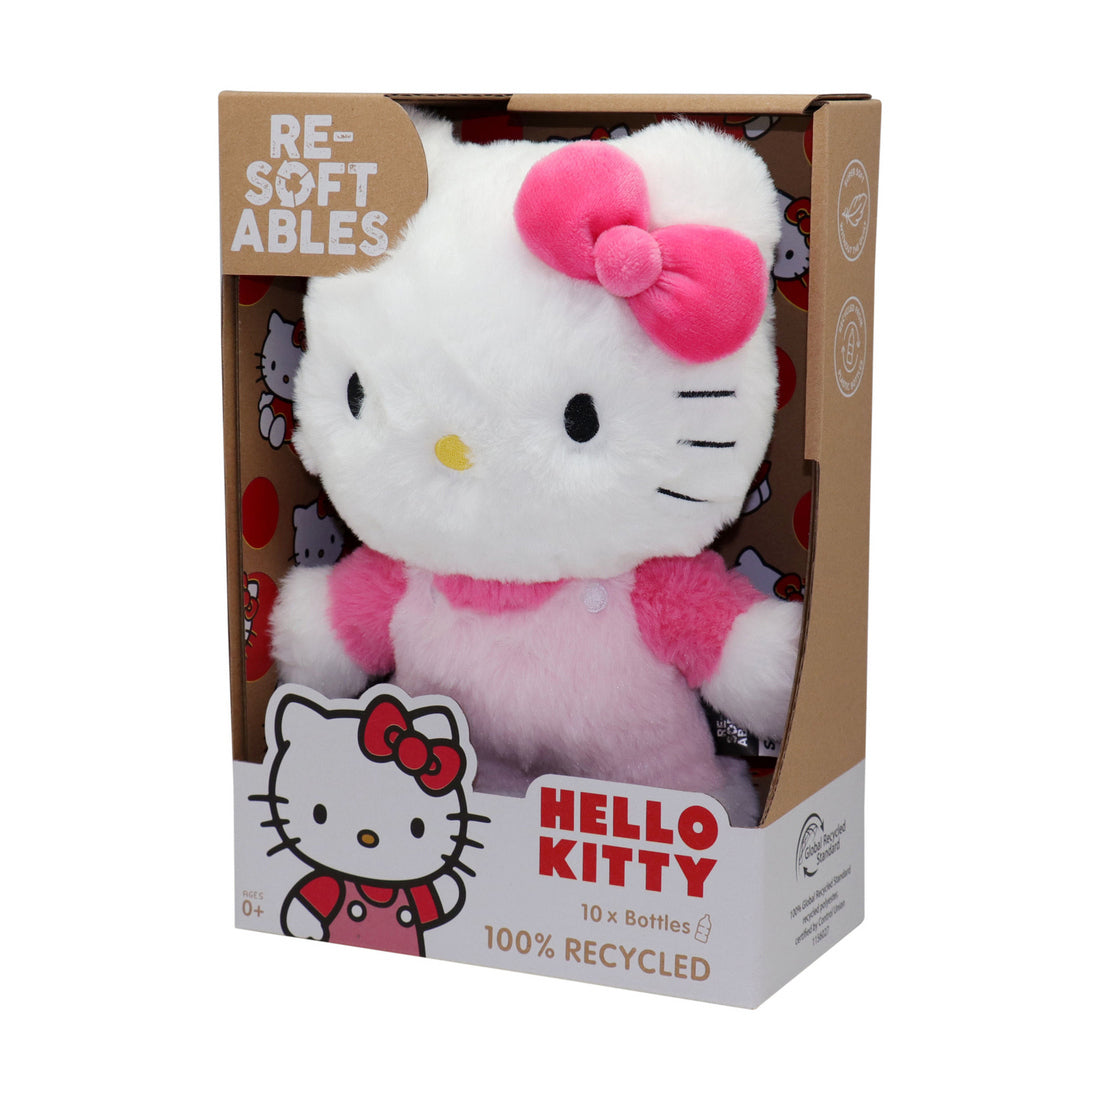 Resoftables Medium Plush - Hello Kitty